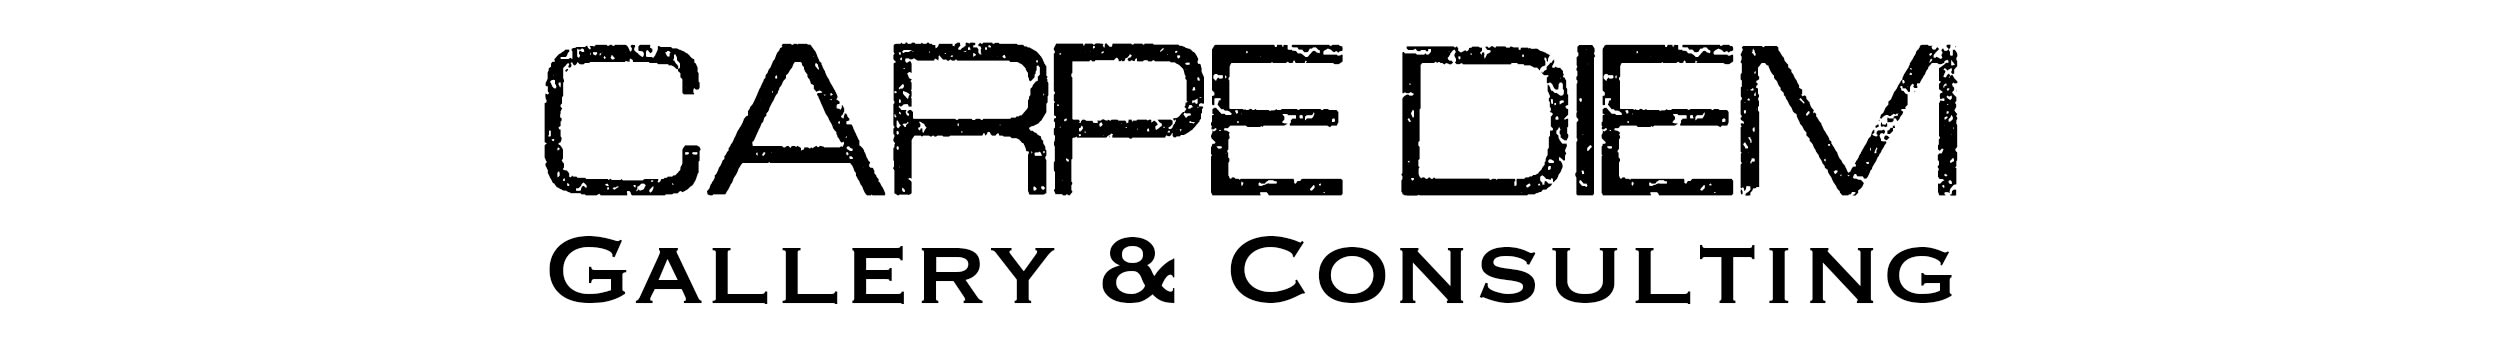 Carpe Diem Gallery company logo